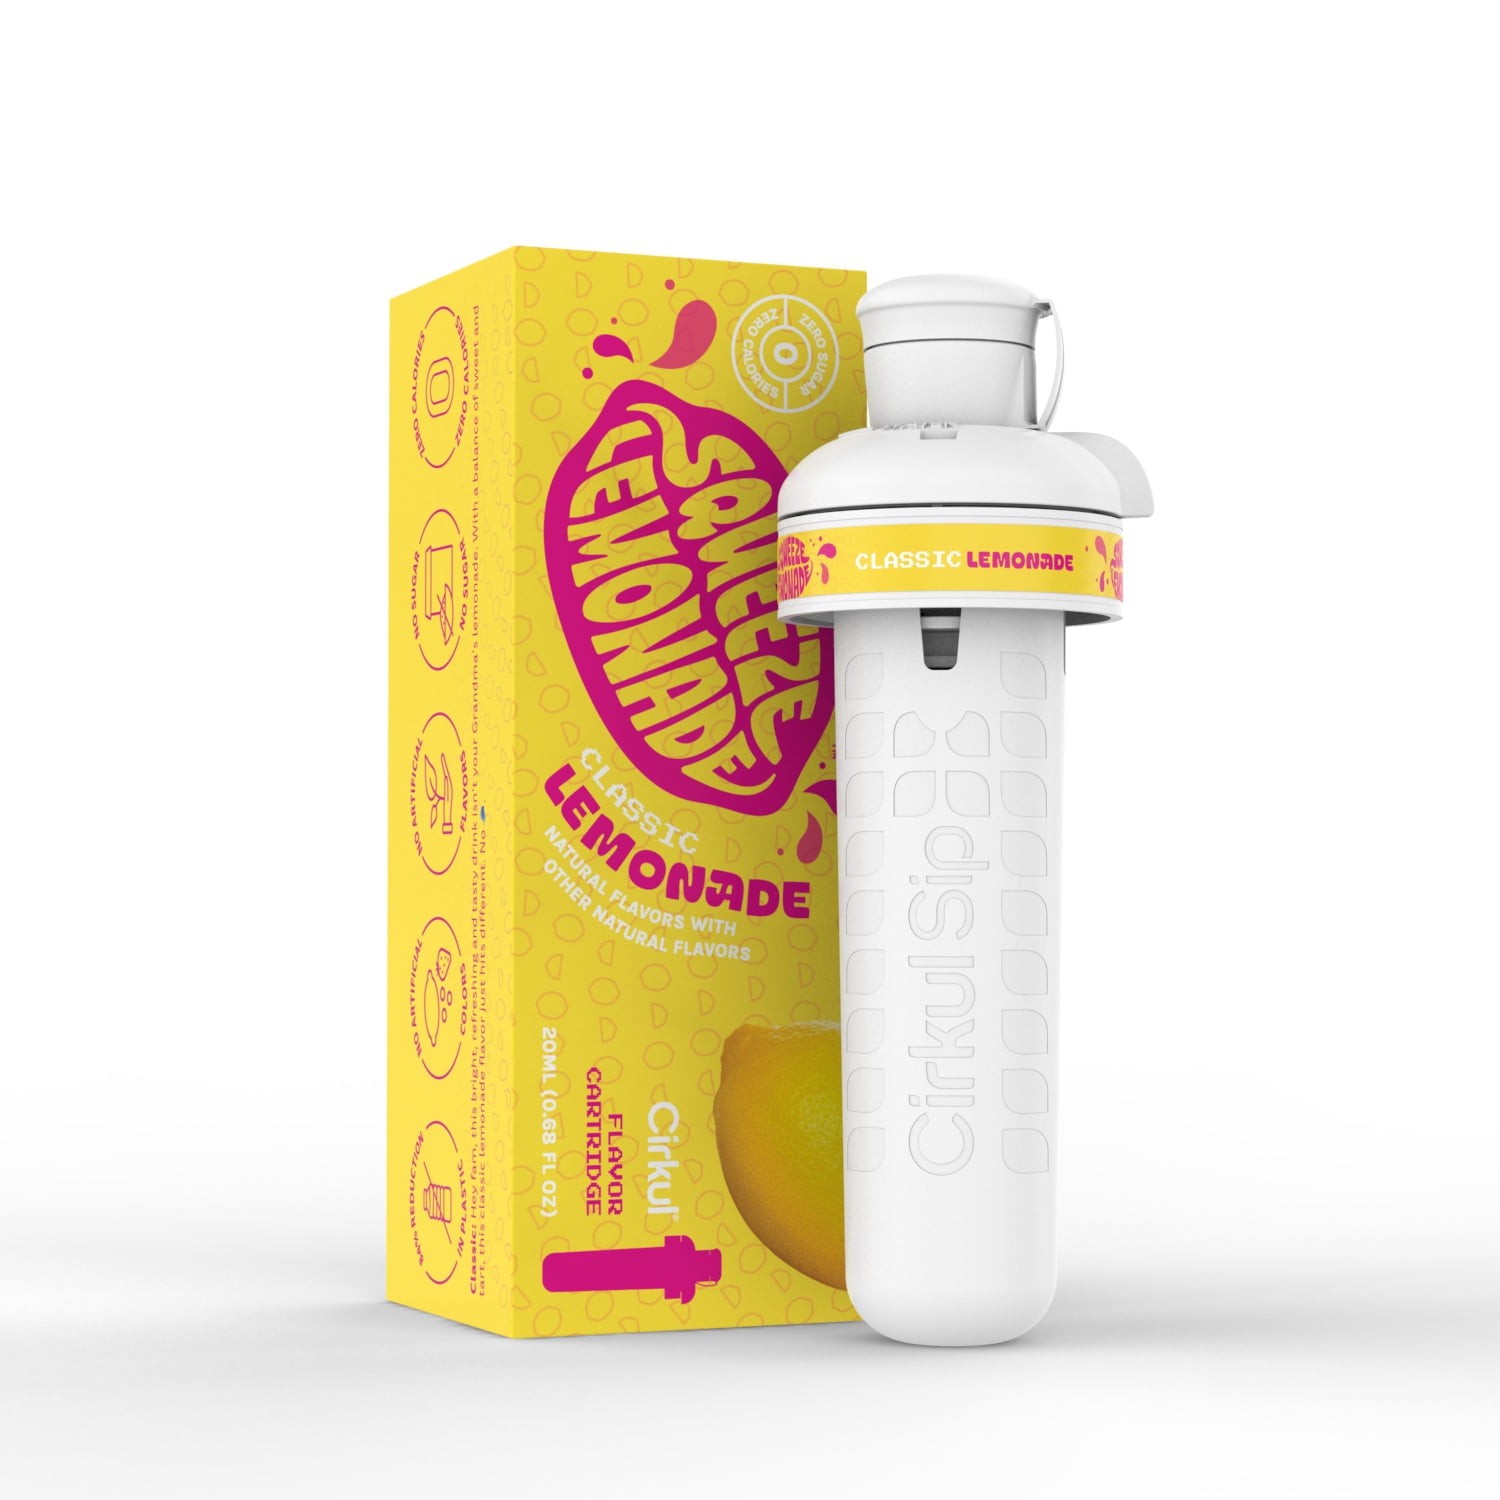 Cirkul - Introducing the Cirkul Squeeze Bottle! 🆕 Enjoy